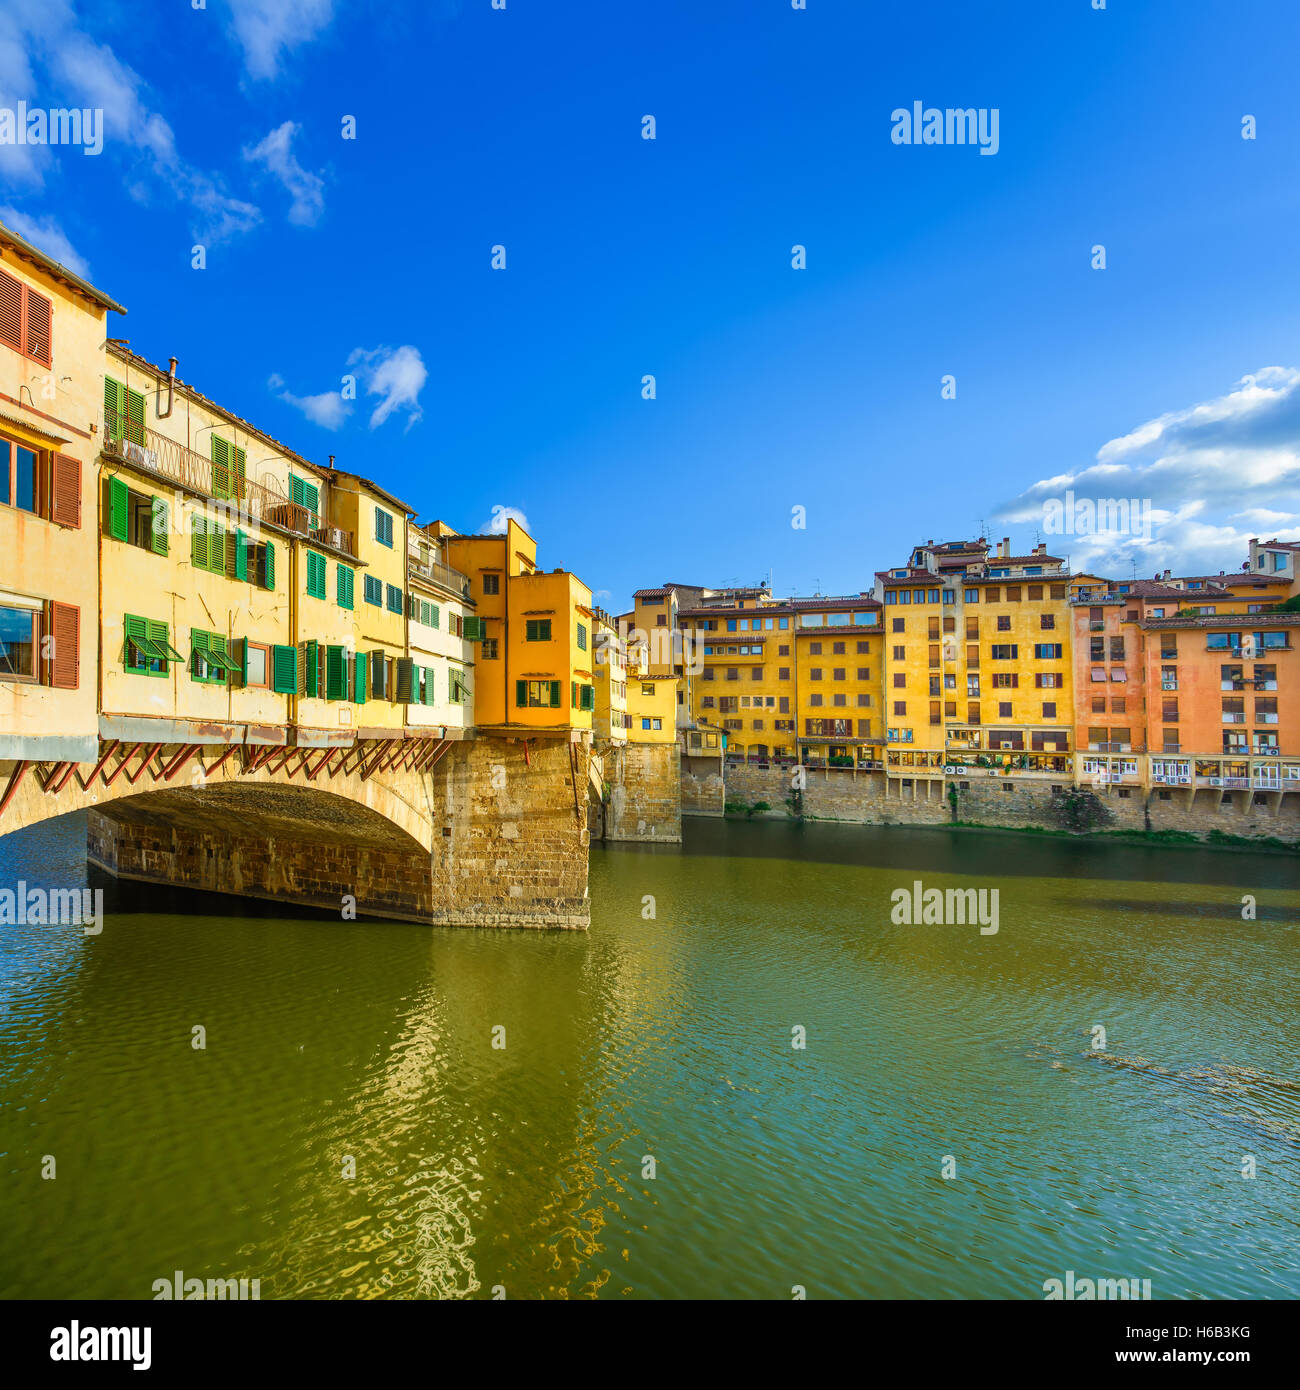 Ponte Vecchio on sunset, old bridge, medieval landmark on Arno river. Florence, Tuscany, Italy. Stock Photo